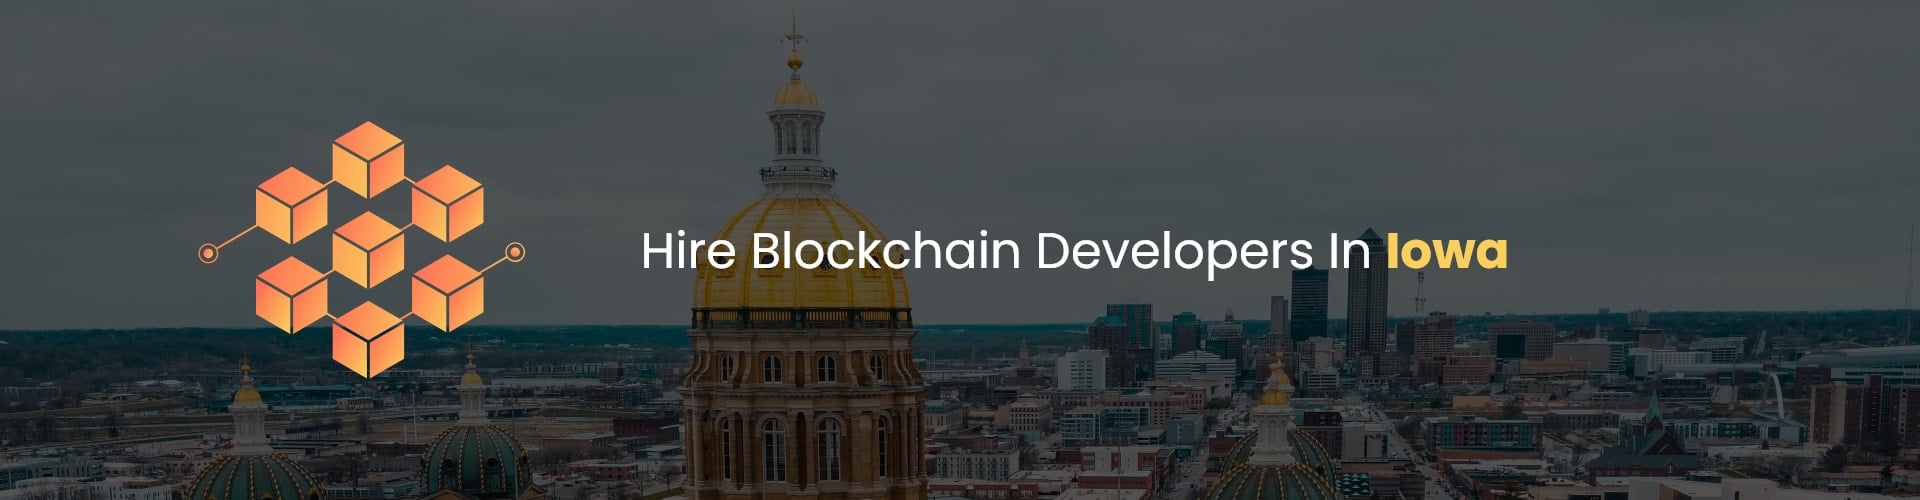 hire blockchain developers in iowa